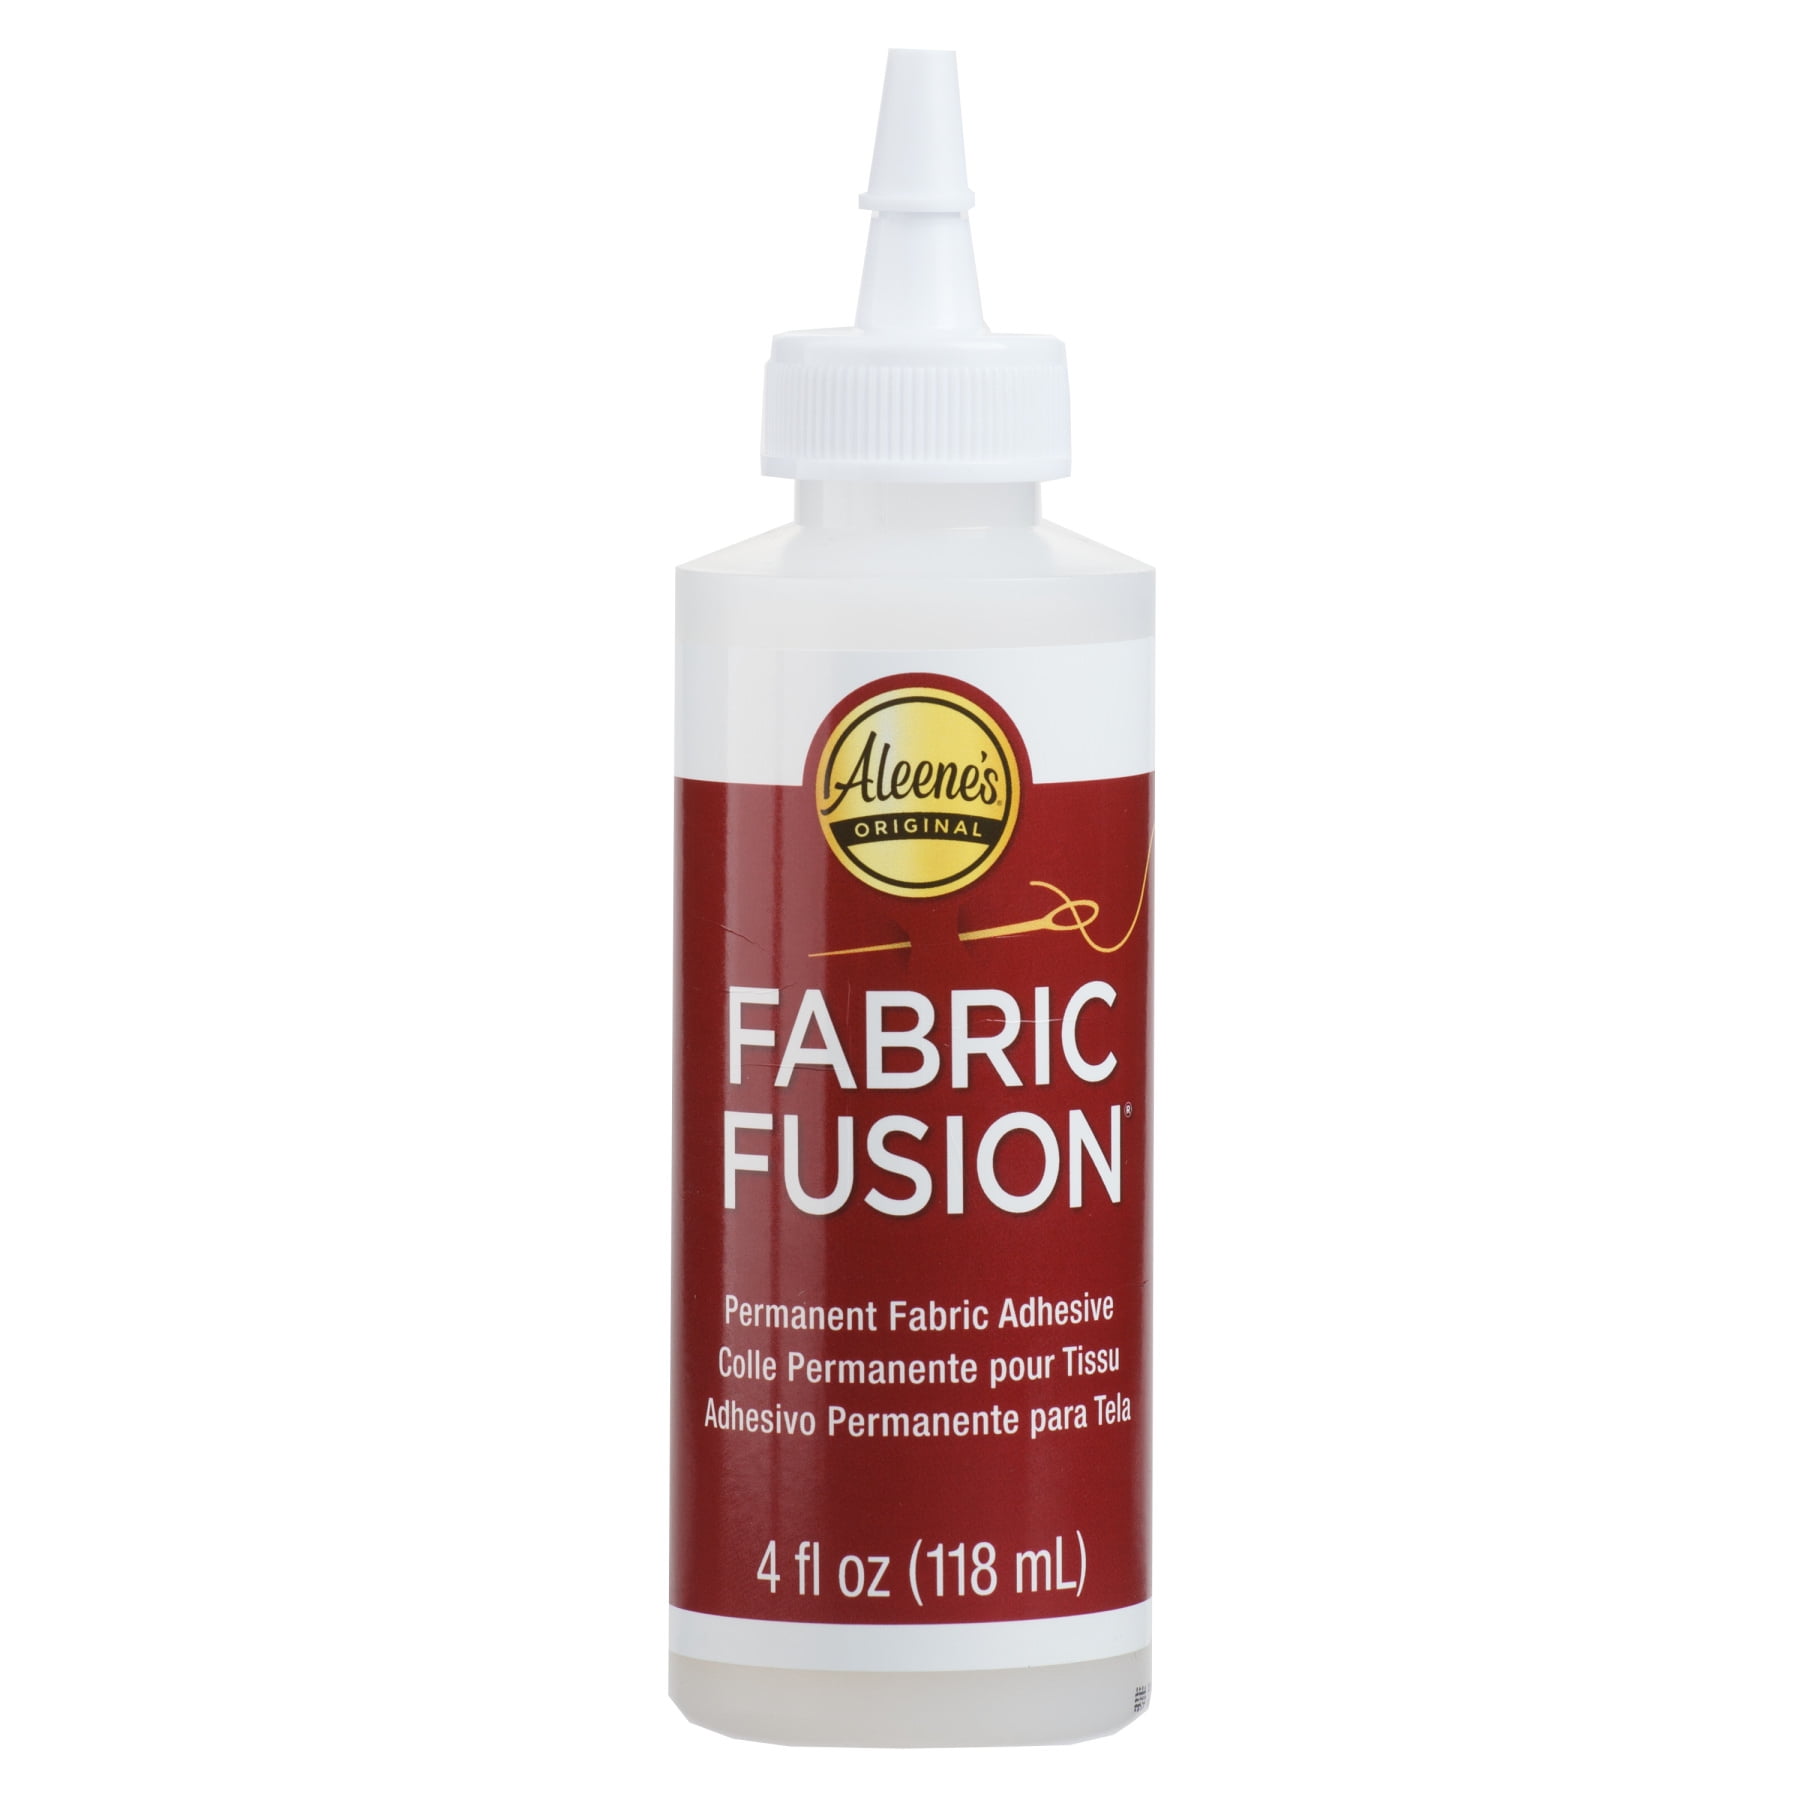 Aleene's Fabric Fusion Permanent Fabric Adhesive 4 fl oz